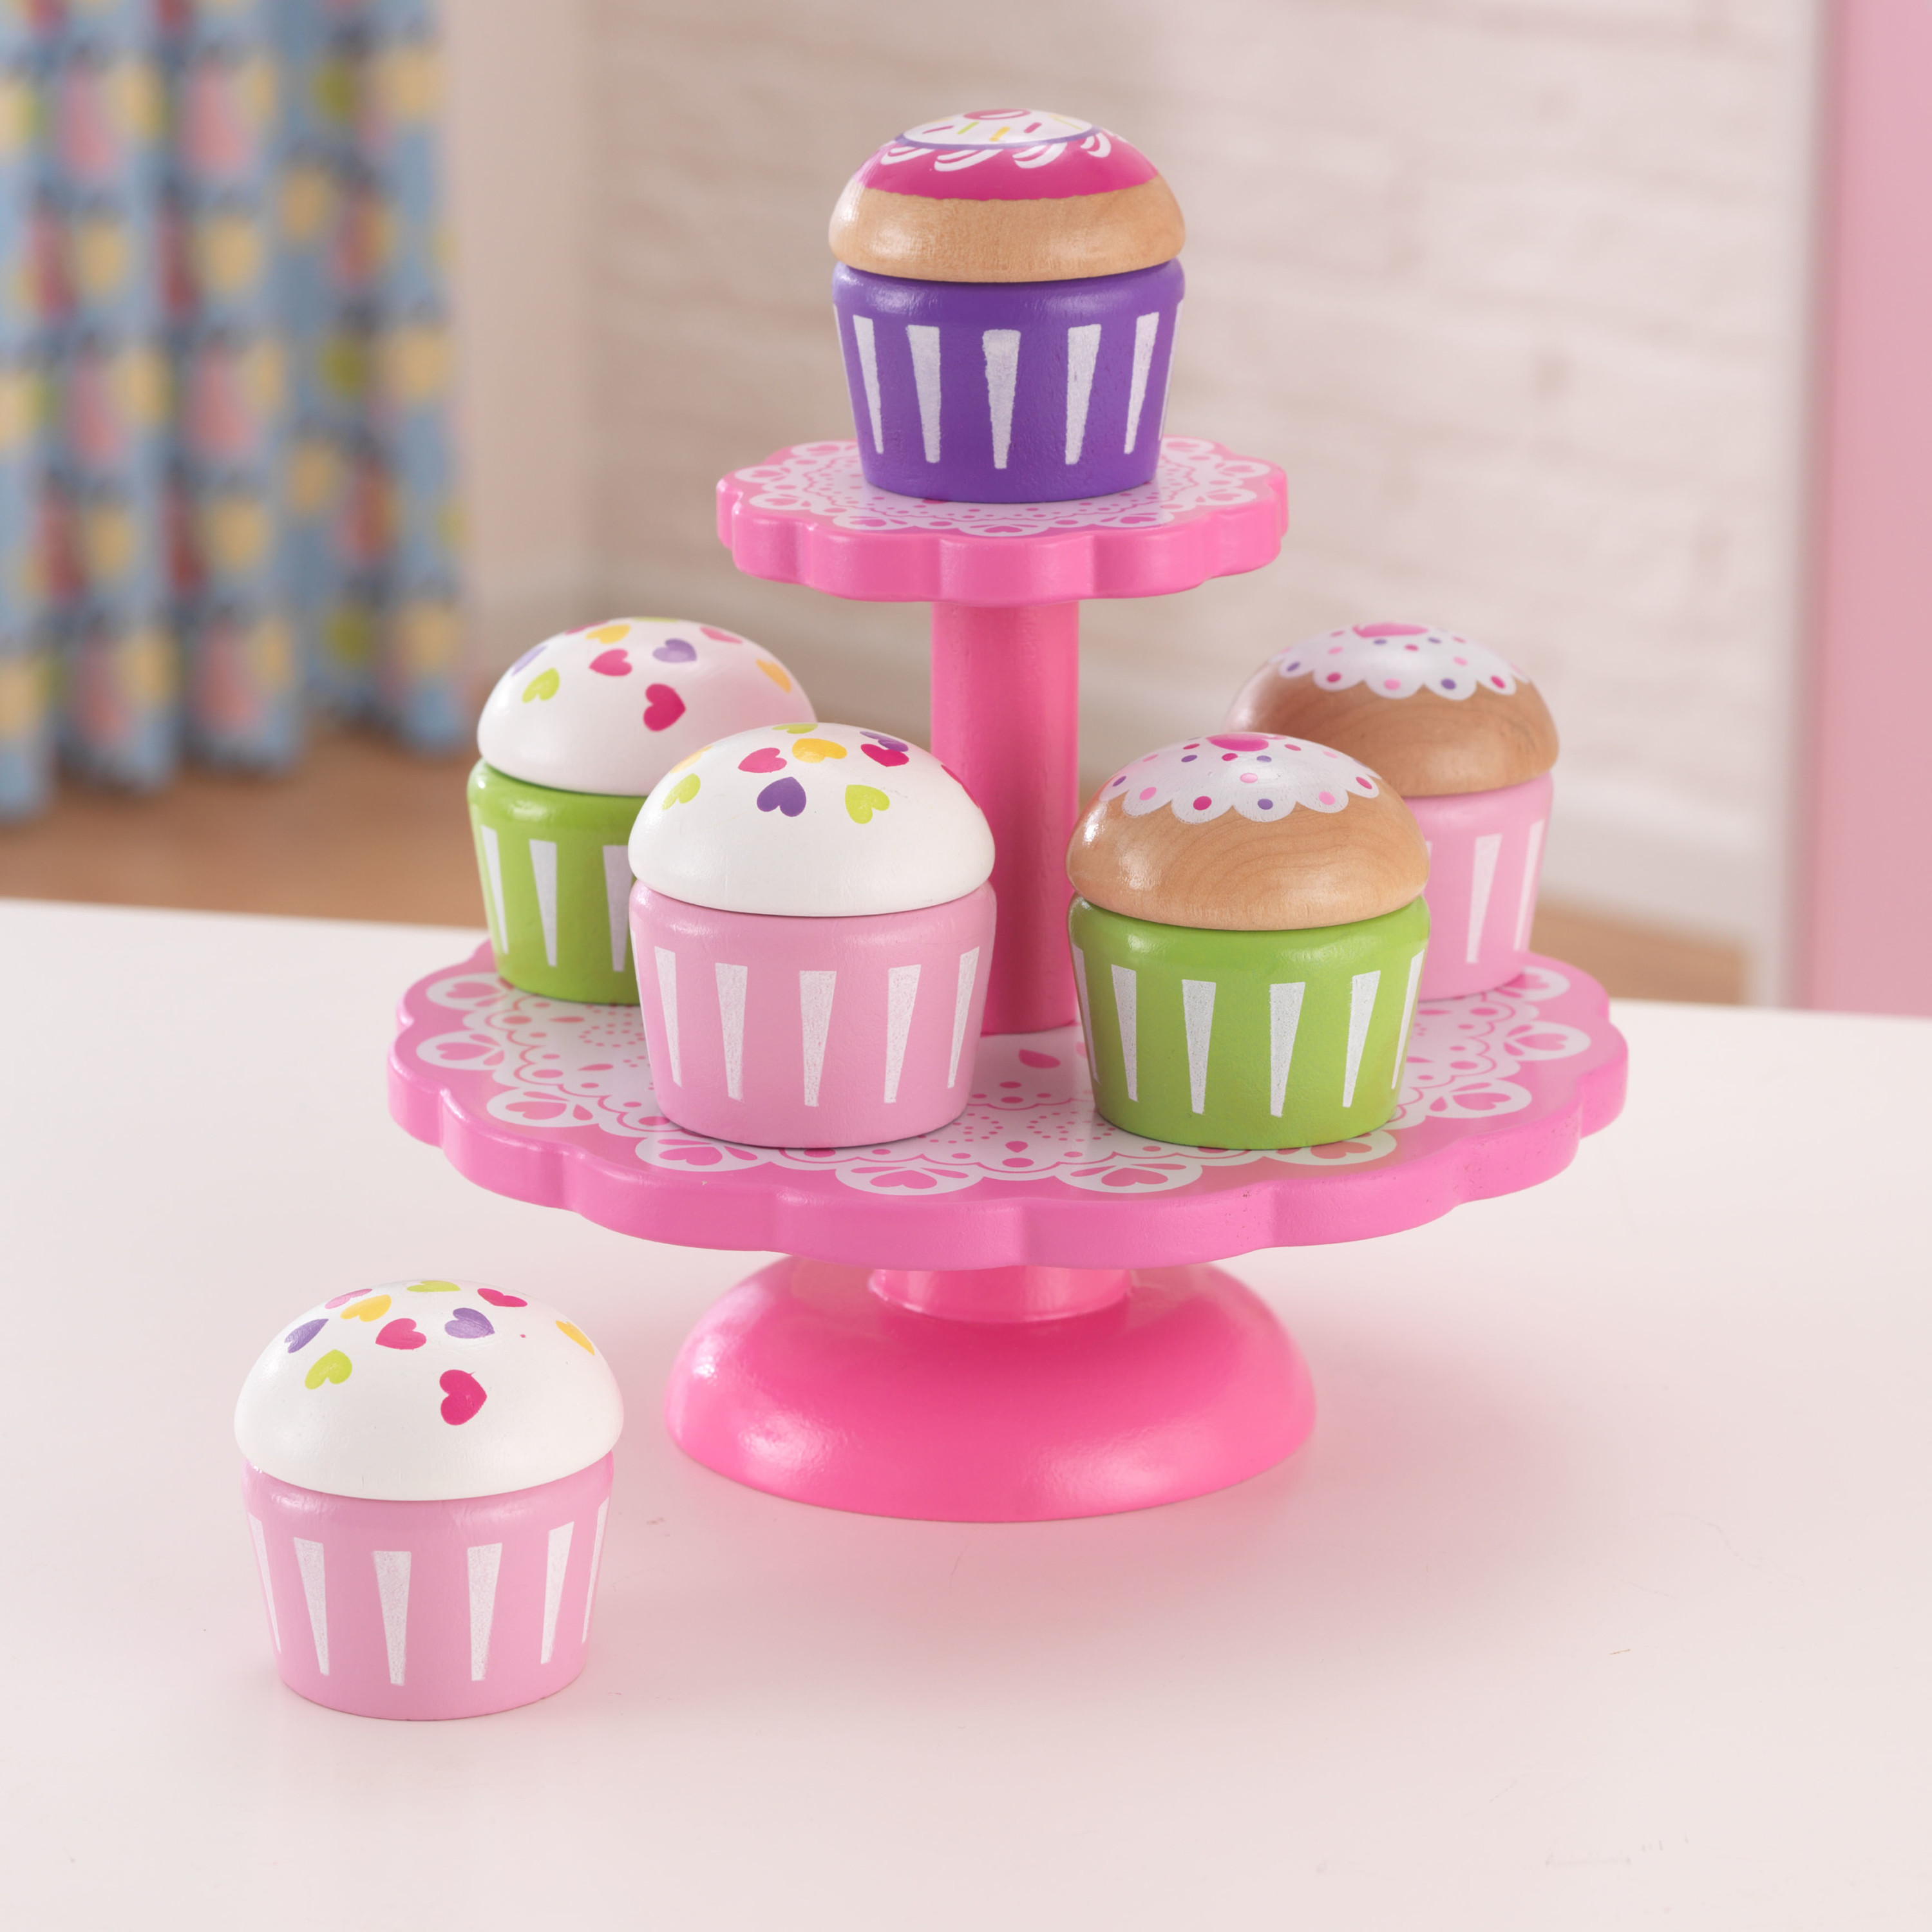 KidKraft Cupcake-Ständer mit Cupcakes - image 2 of 3